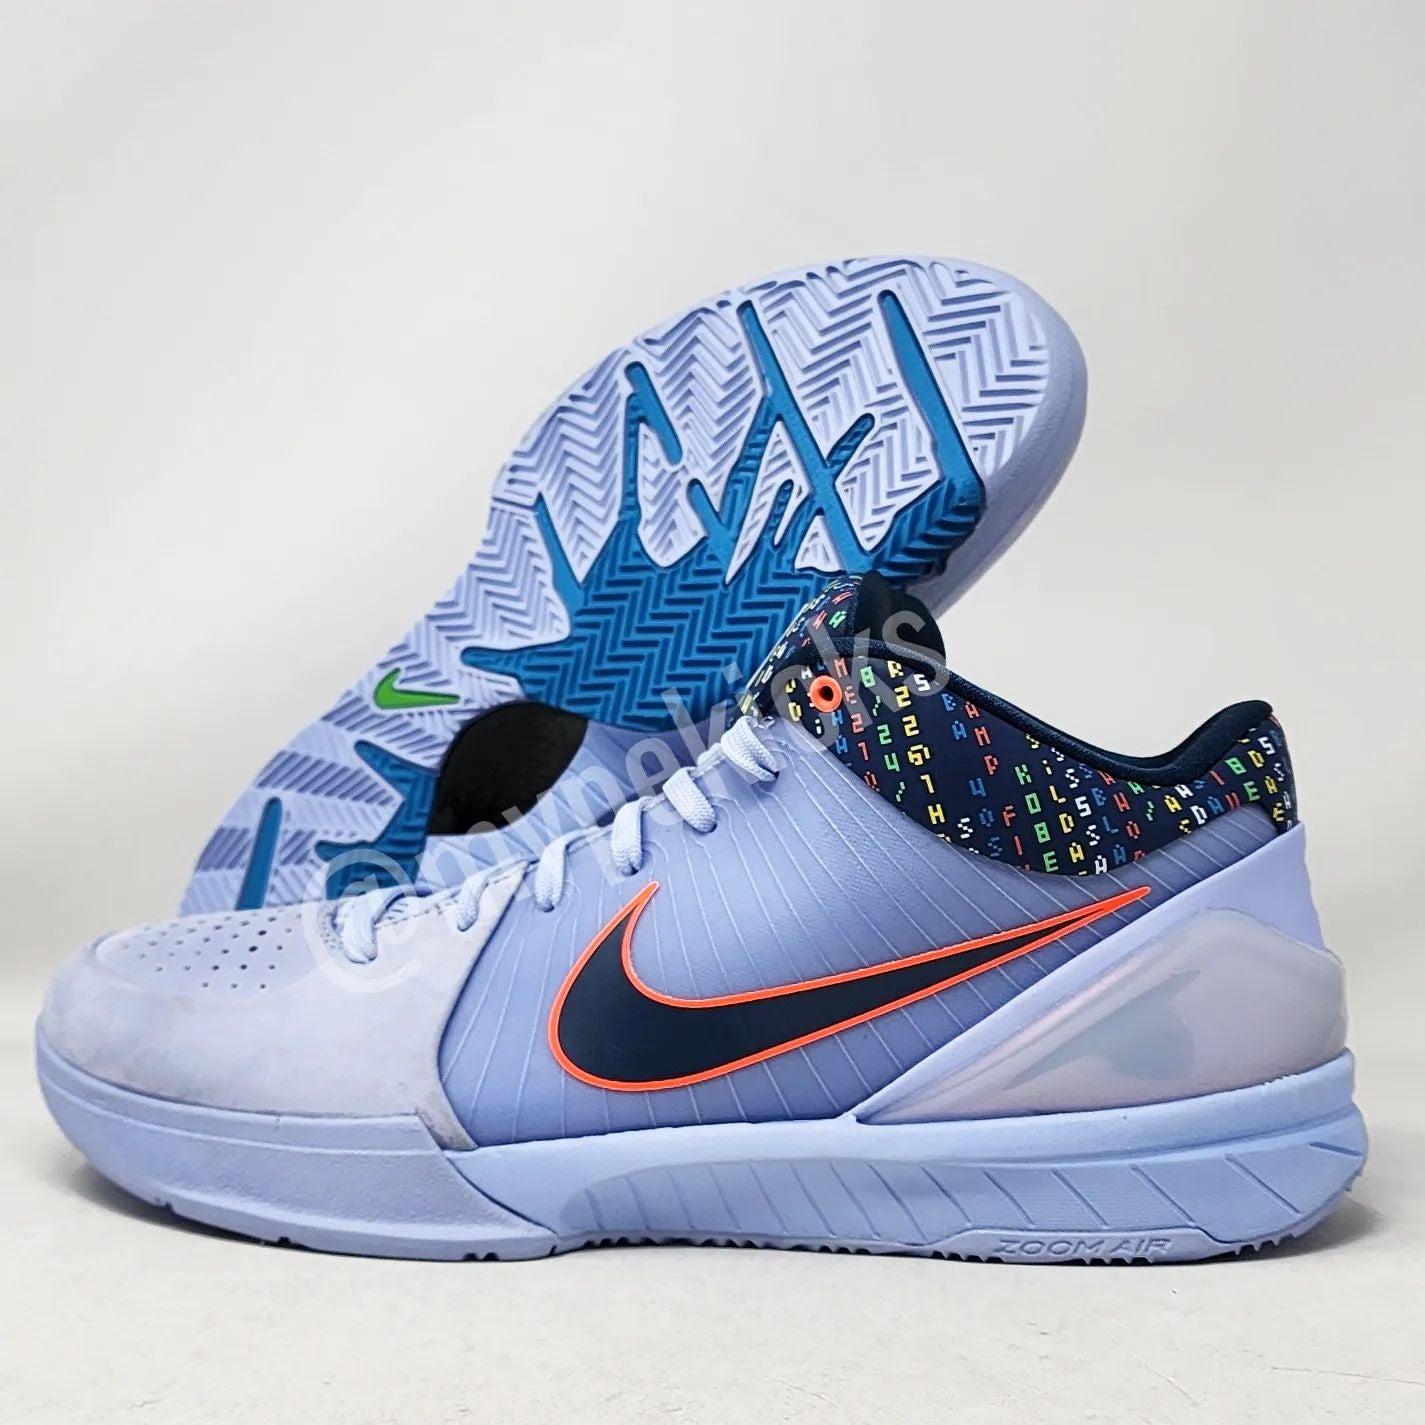 Nike Kobe 4 Protro - 2019 Skills Academy PE